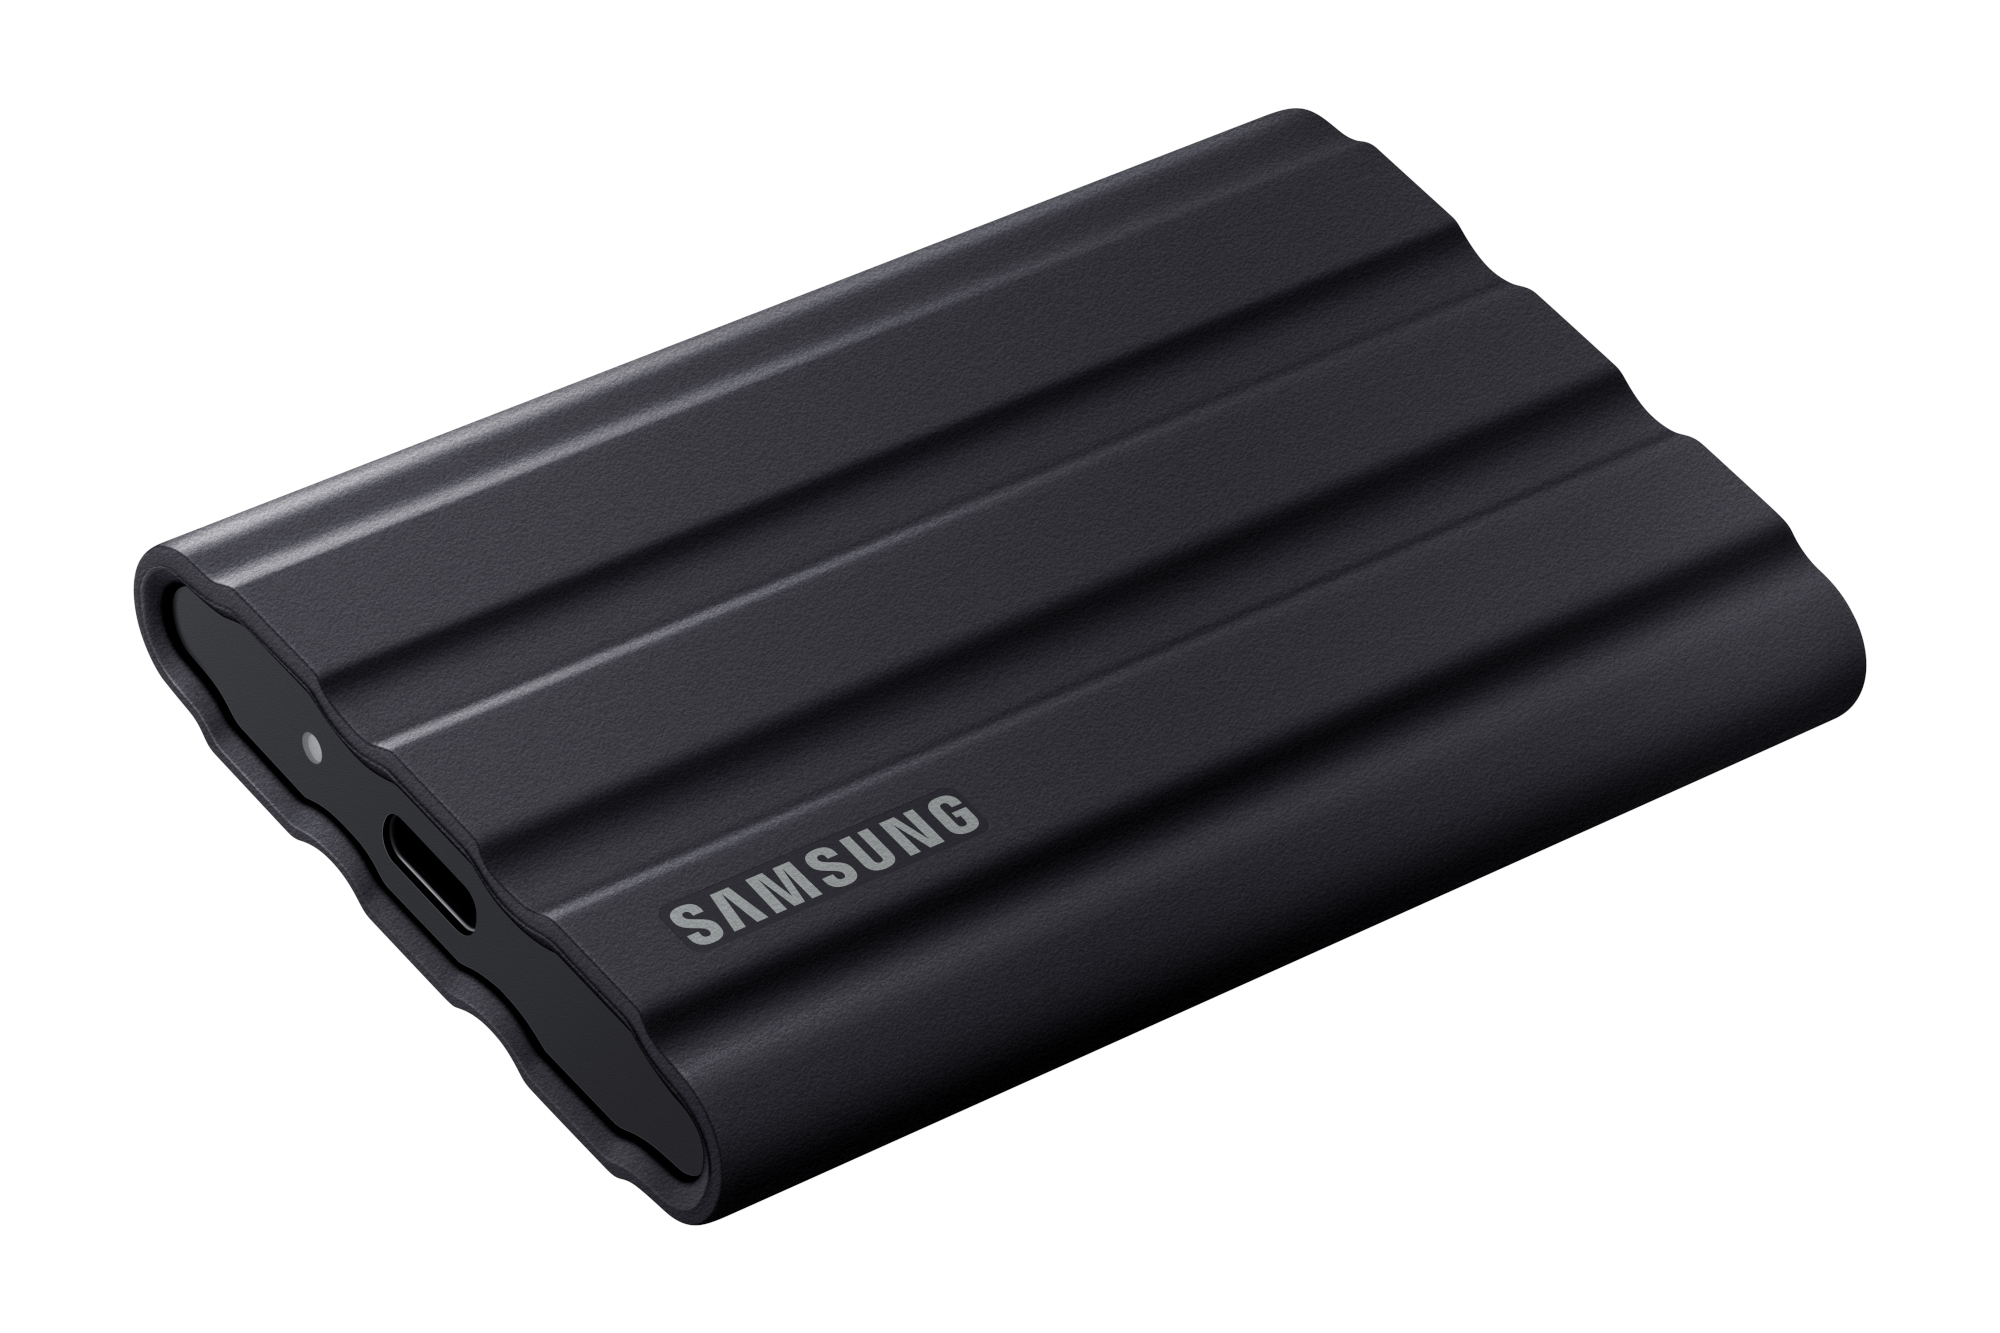 Samsung T7 Shield 4TB - Best high-capacity performance drive